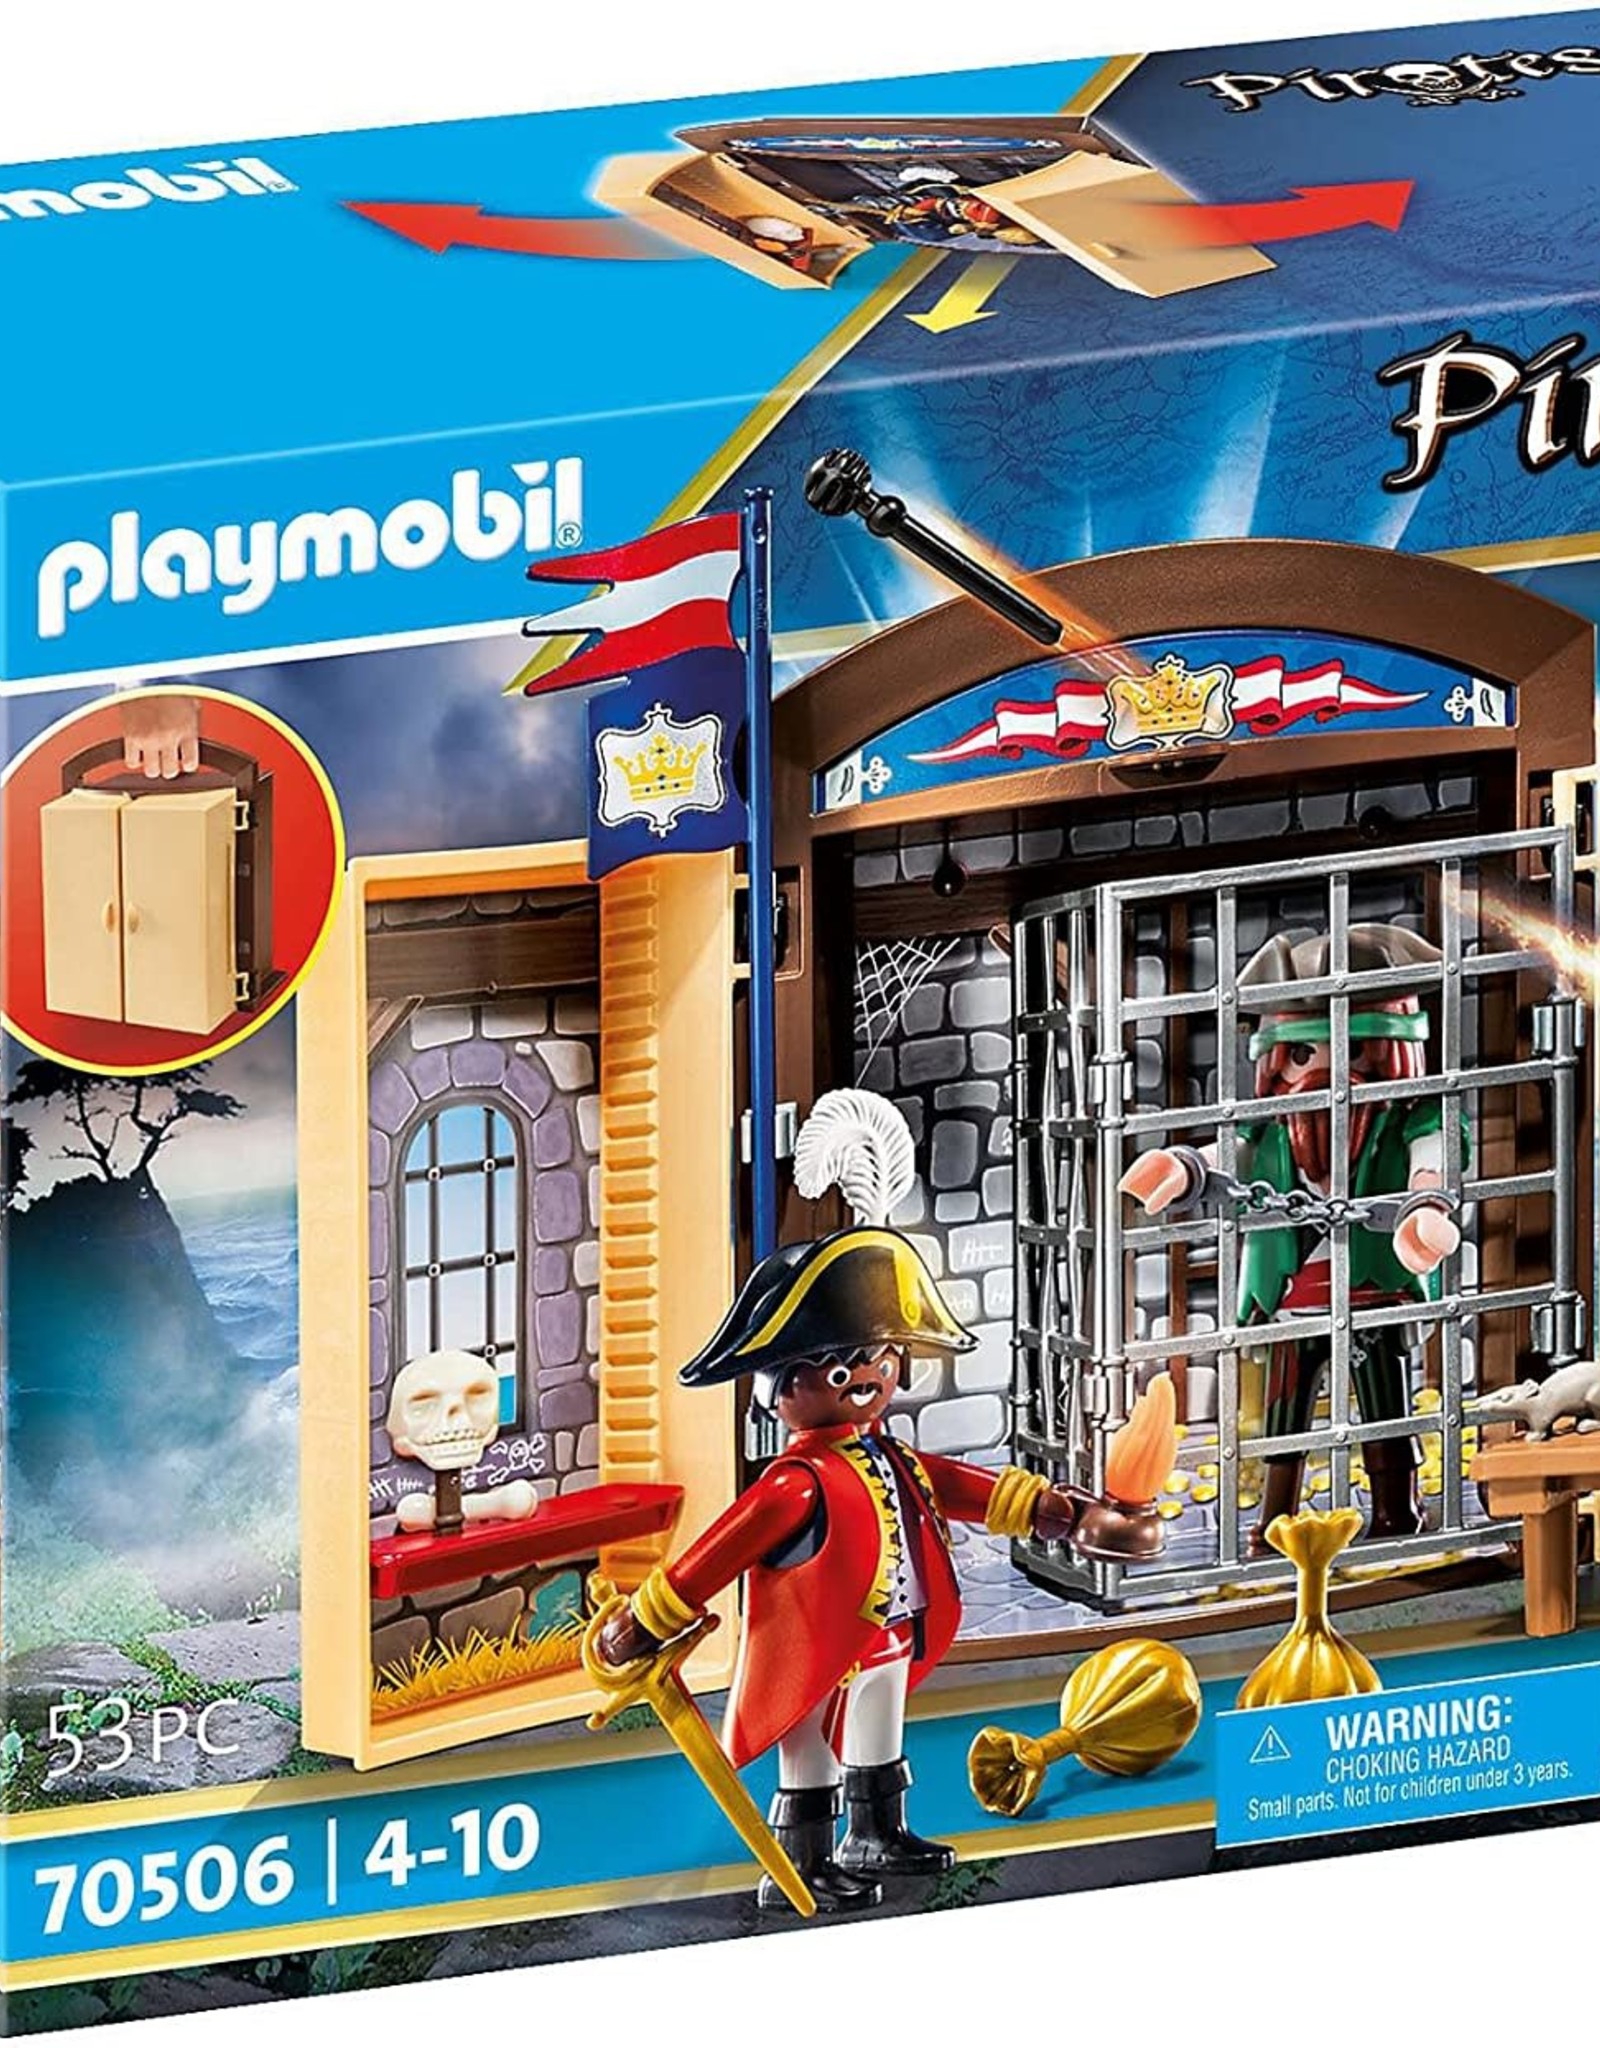 Playmobil PM Pirate Adventure Play Box